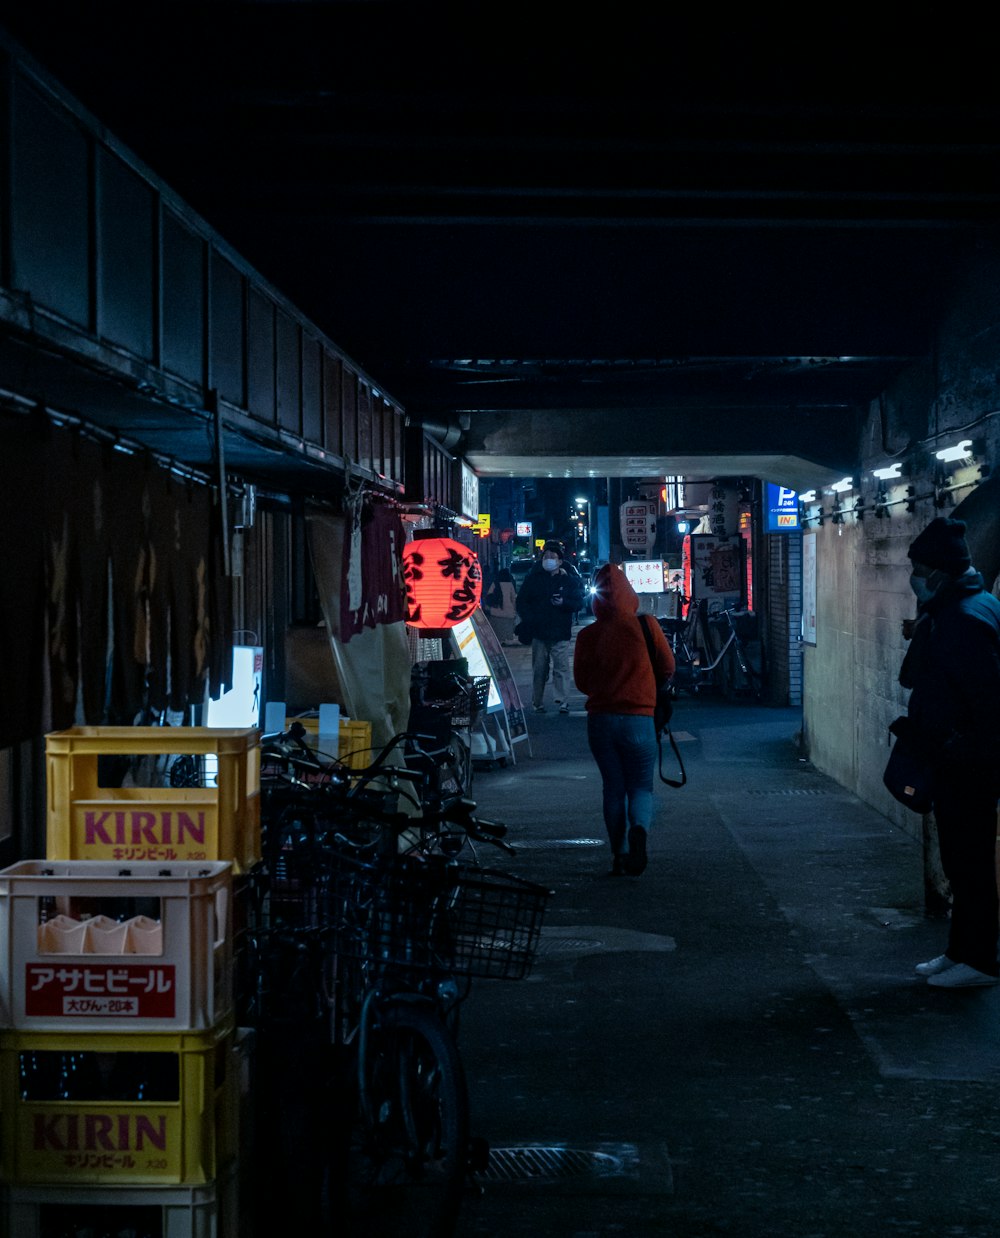 a person walking down a dark alley way